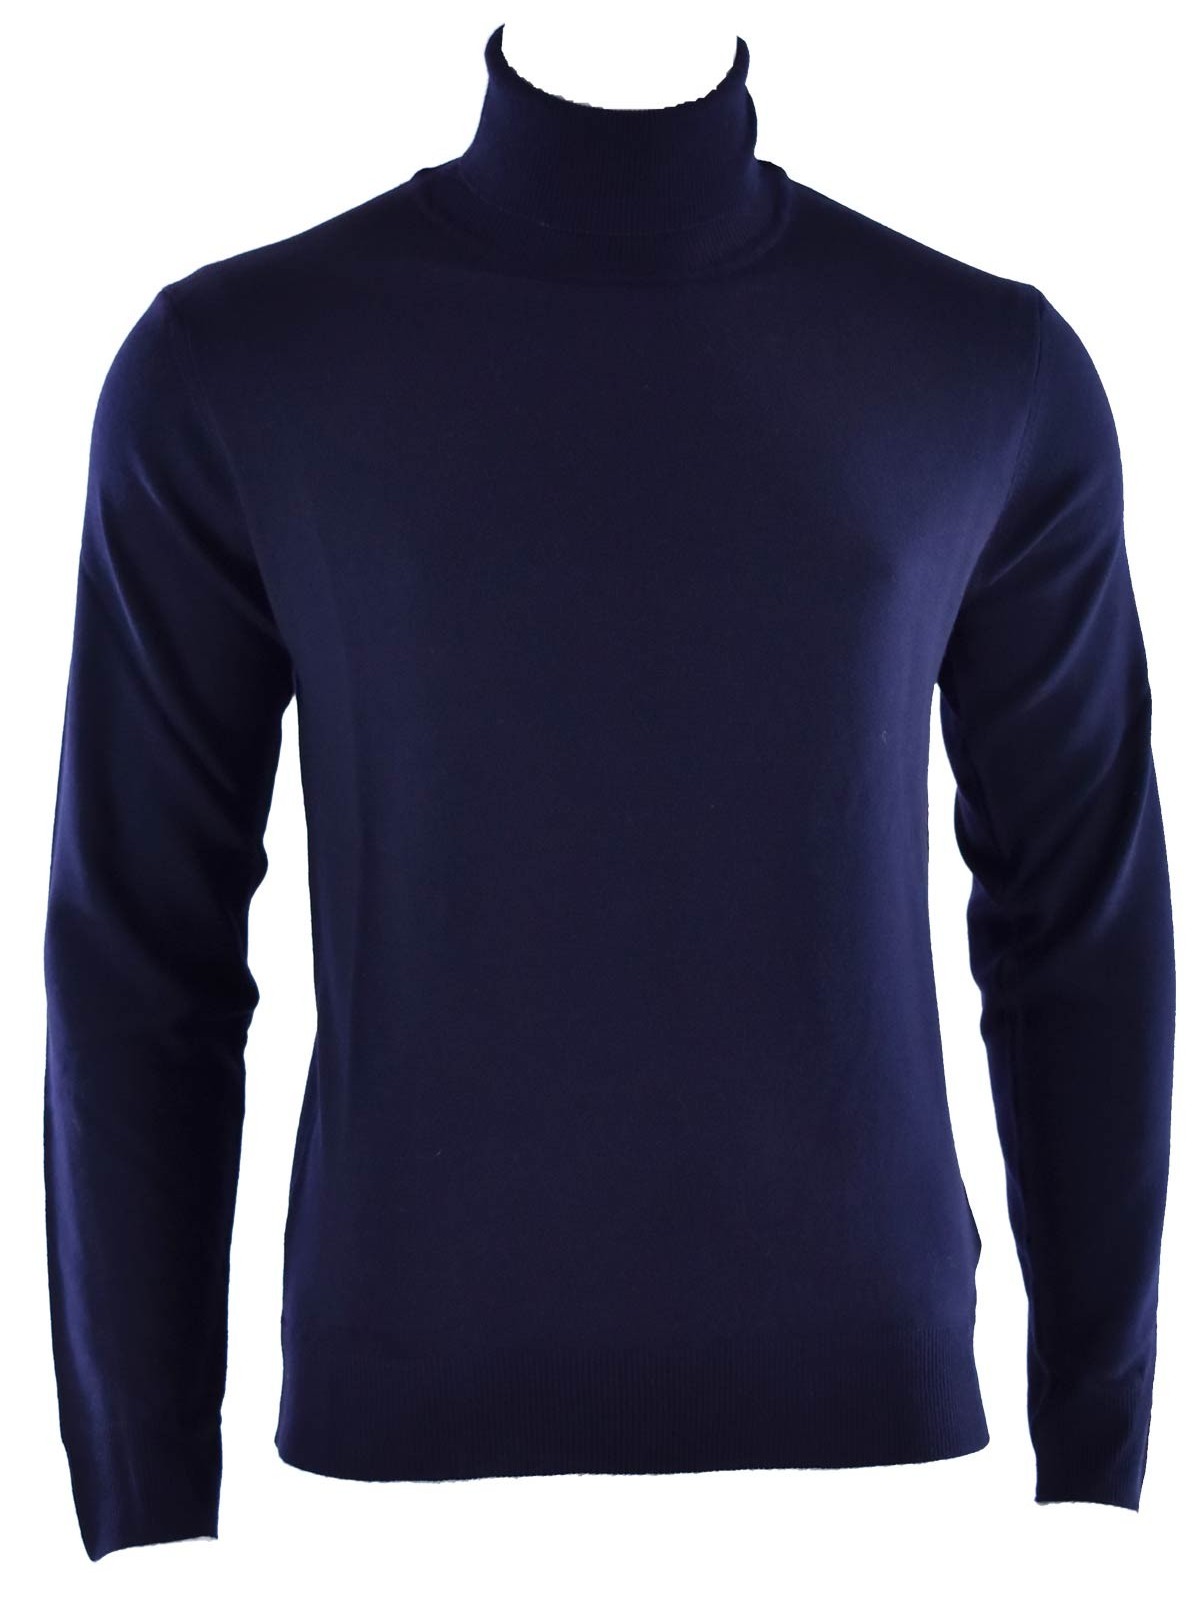 Thin Turtleneck Sweater Pure Extrafine Merino Wool